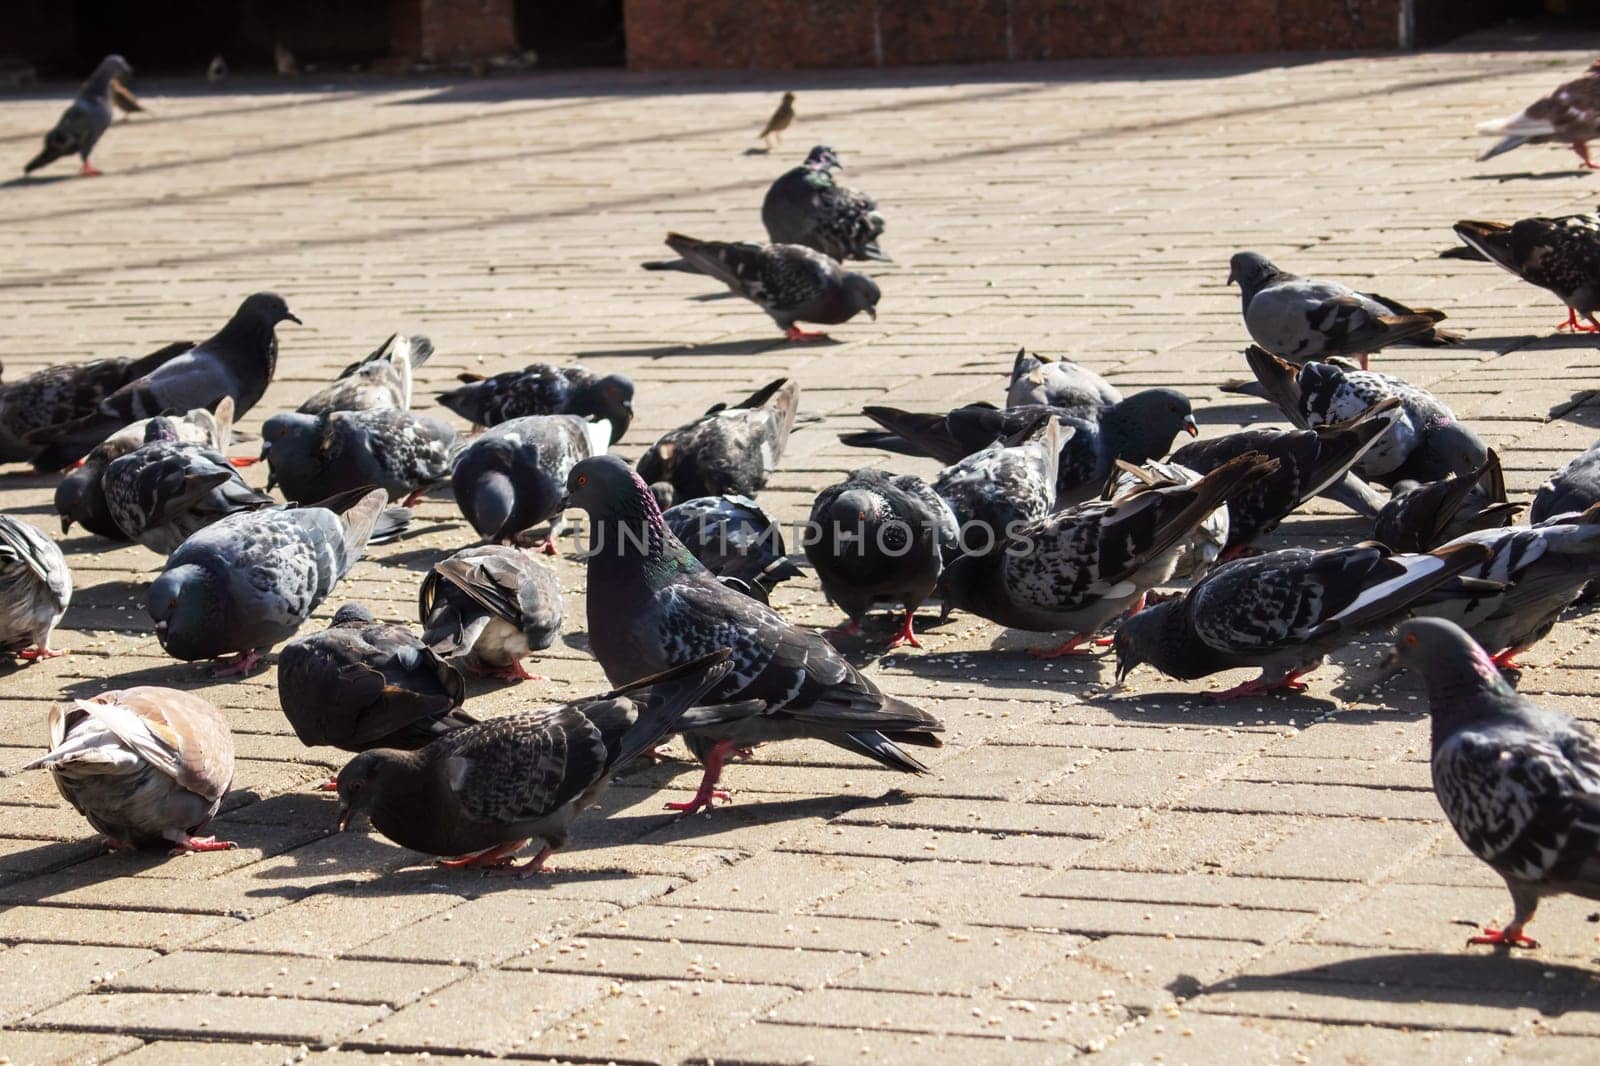 Pigeons eating grain on the sidewalk closeup by Vera1703